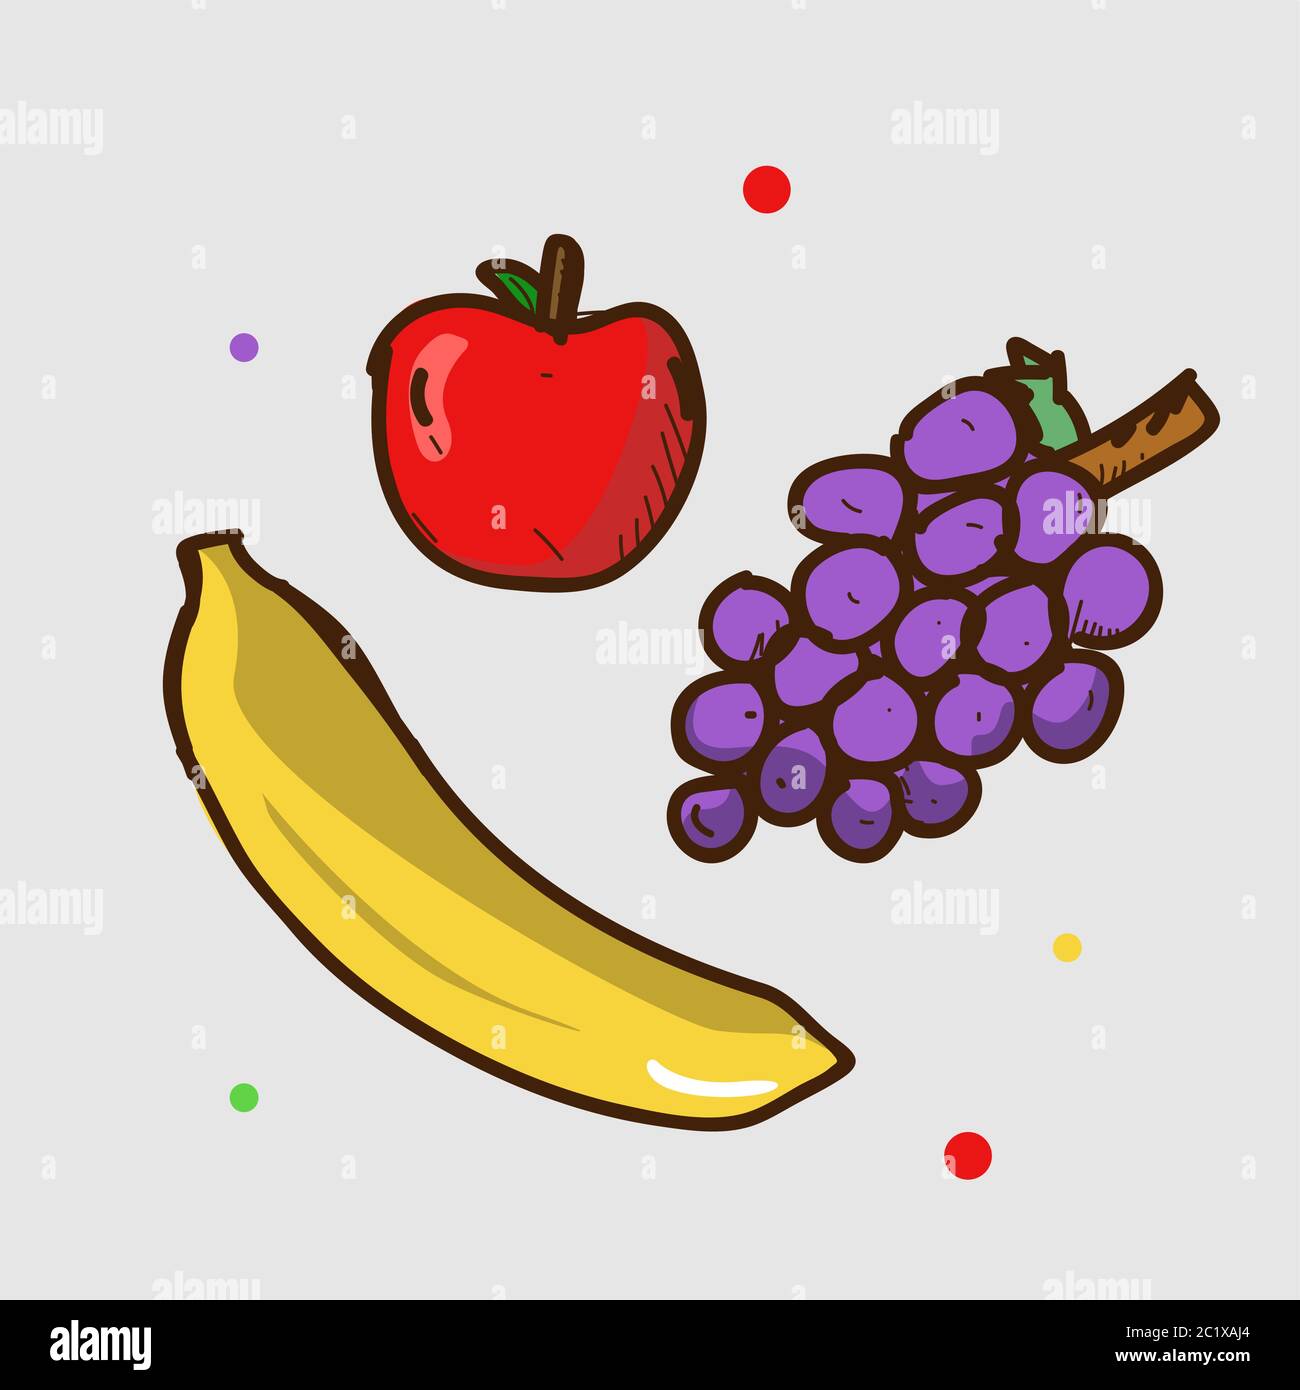 Apple and banana and grape vector illustration Stock Vector